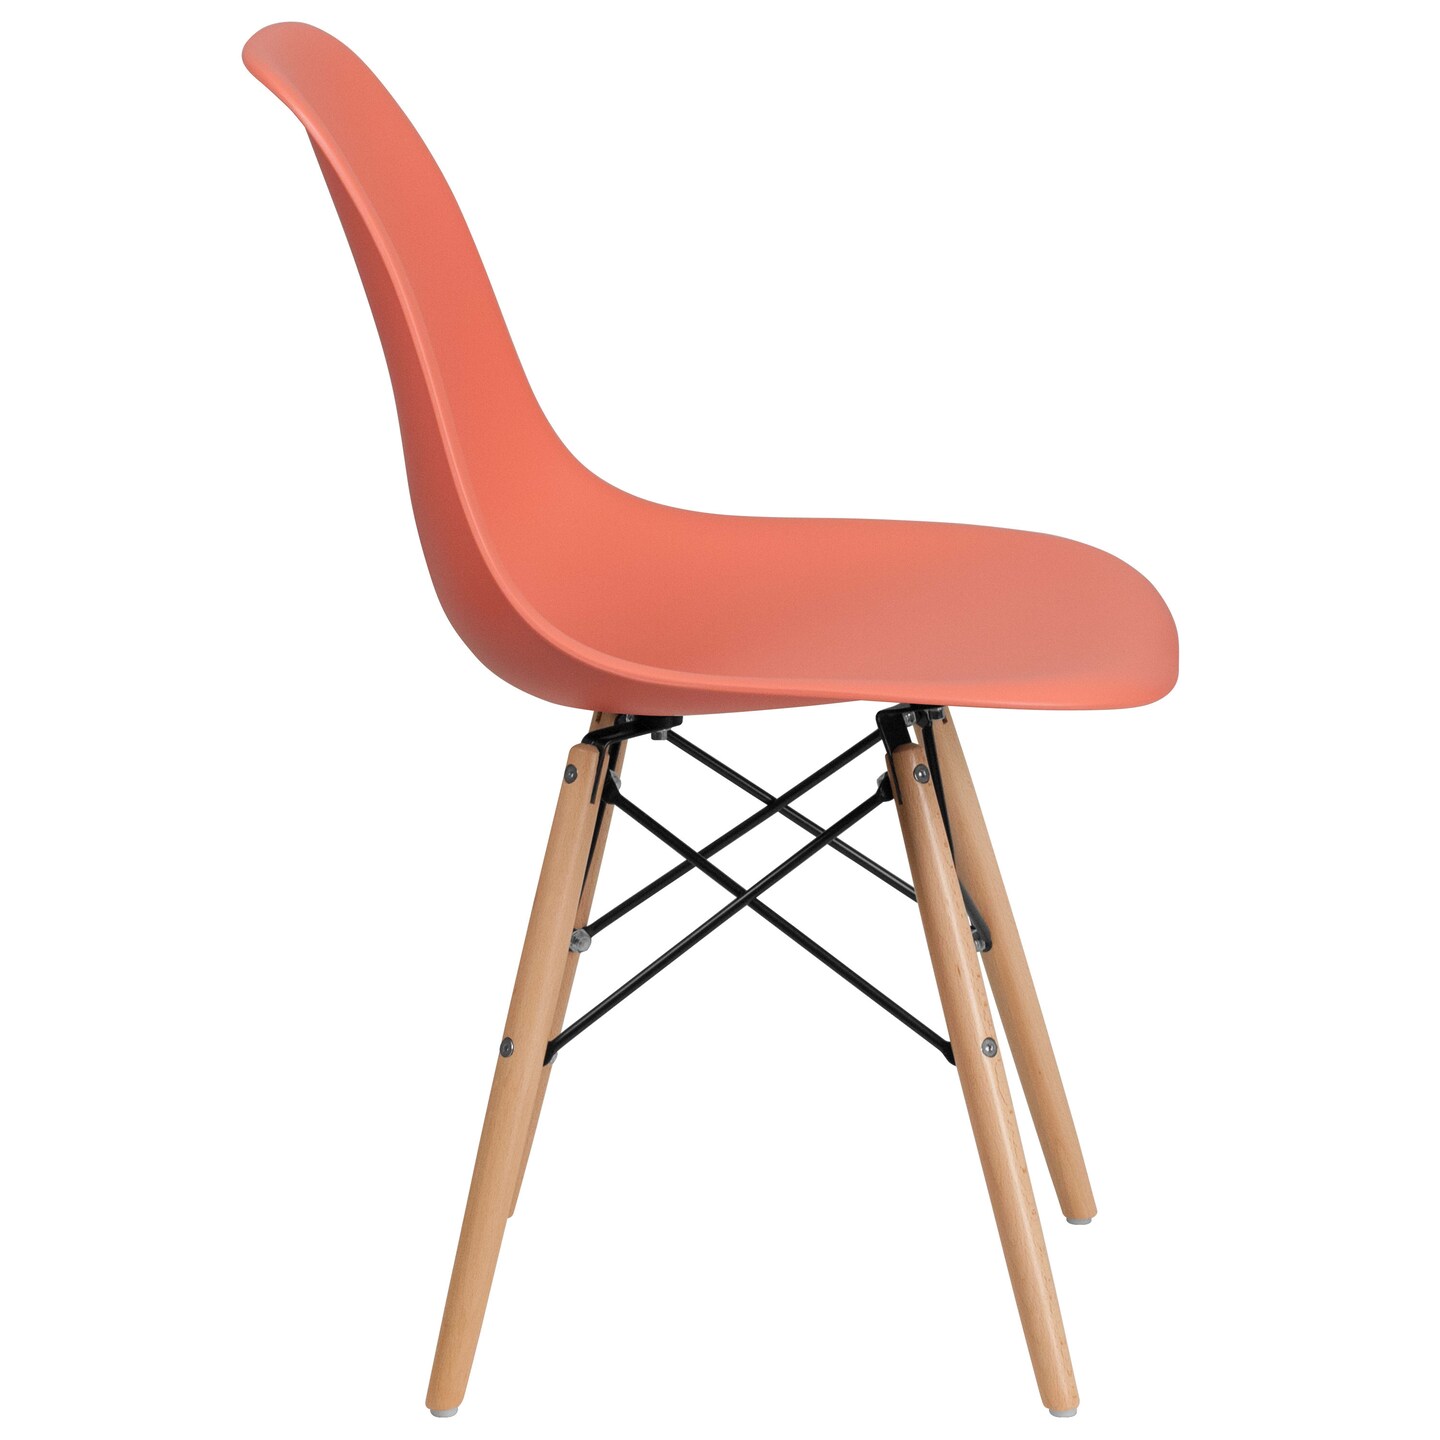 Merrick Lane Elton Series Polypropylene Accent Chair with Metal Braced Wooden Legs